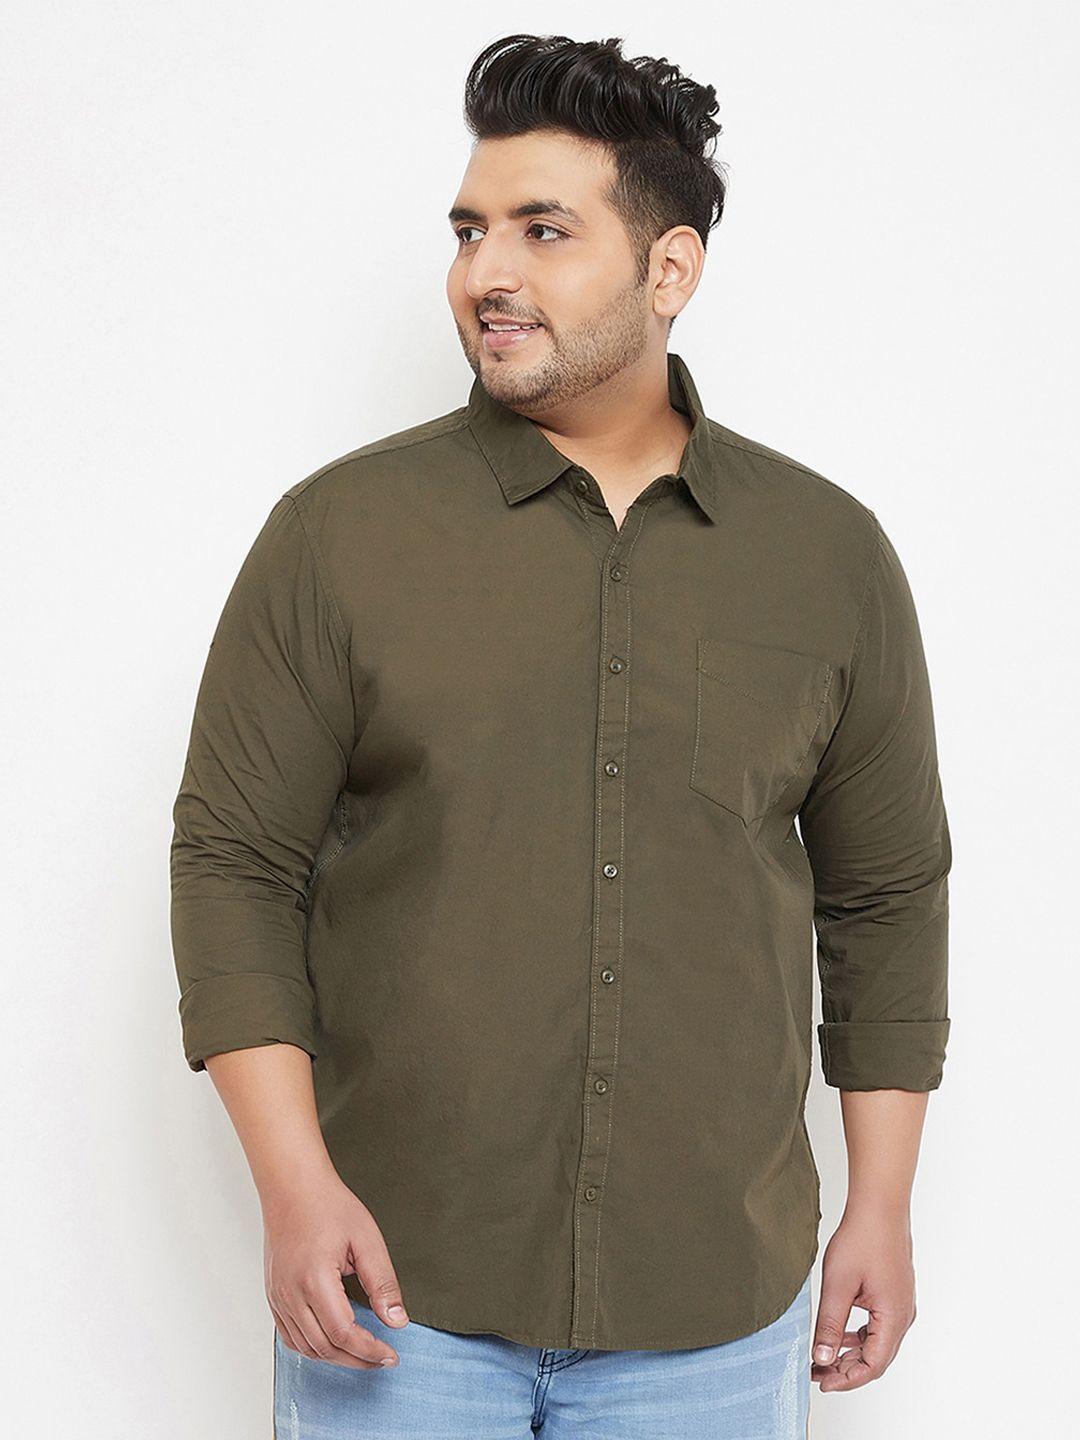 instafab-plus-men-plus-size-green-classic-casual-shirt